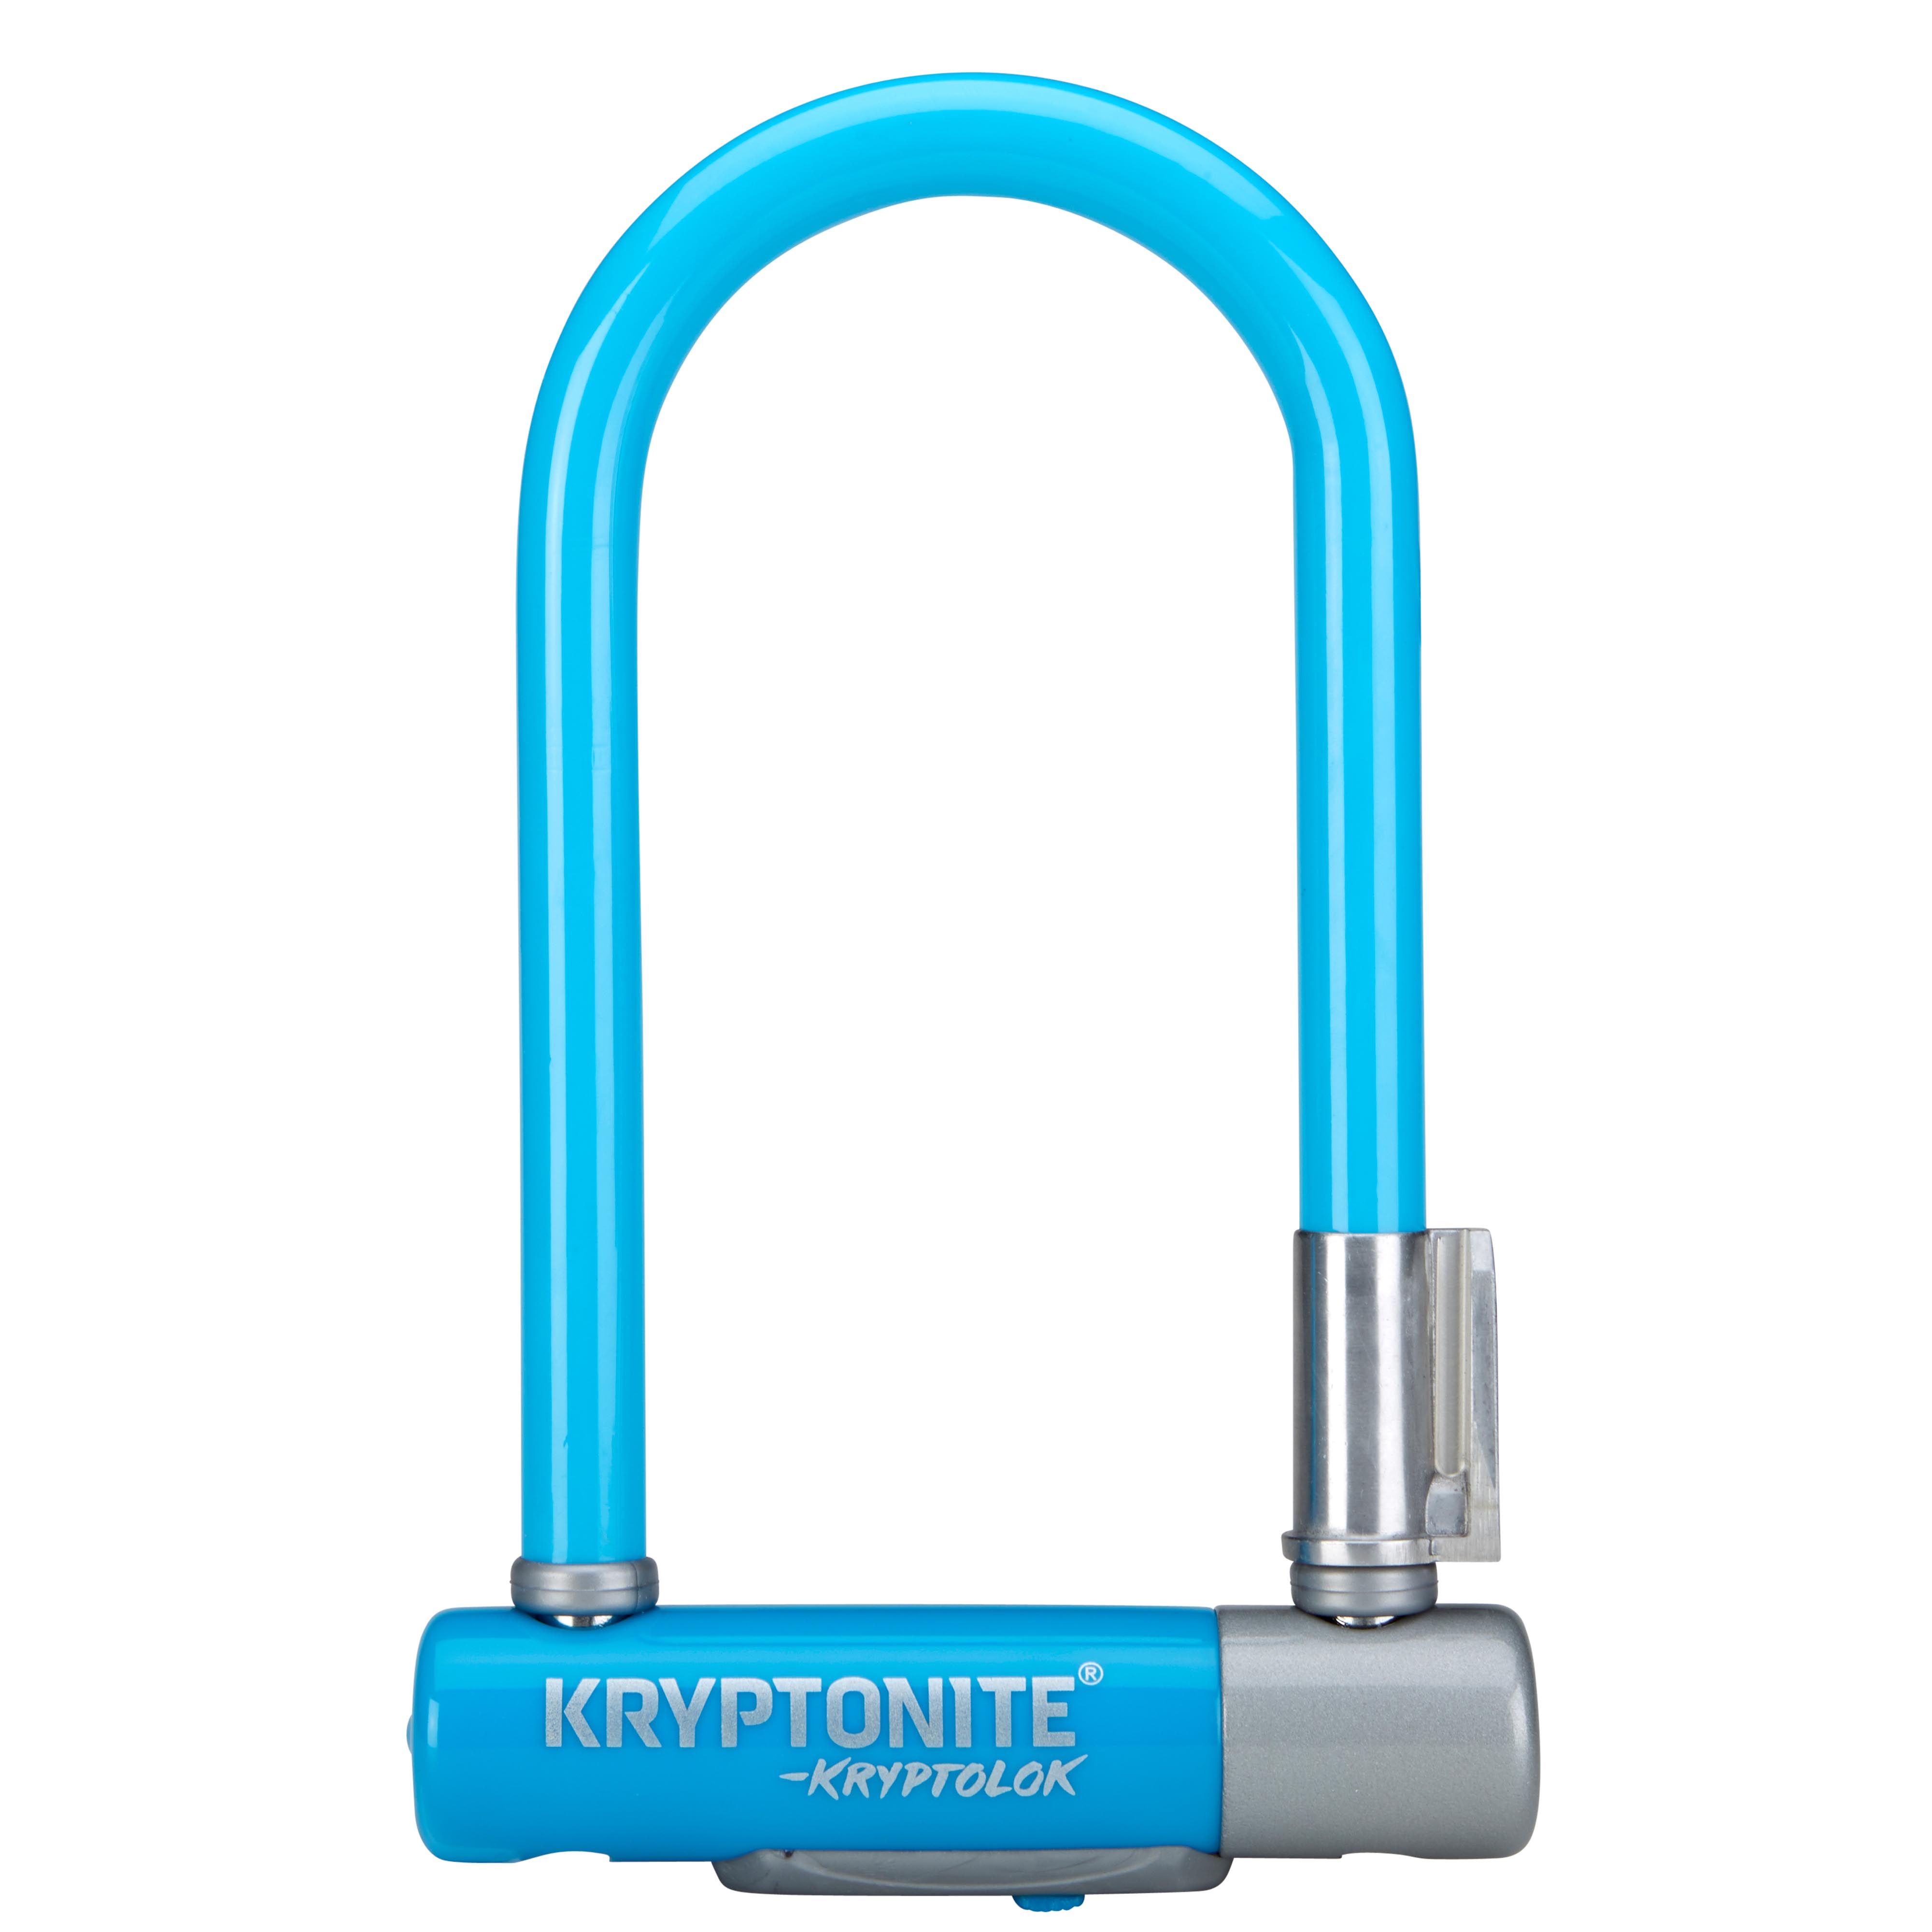 Buy Kryptonite Keeper Bike Lock with Flex Cable - 1.2m, Bike locks